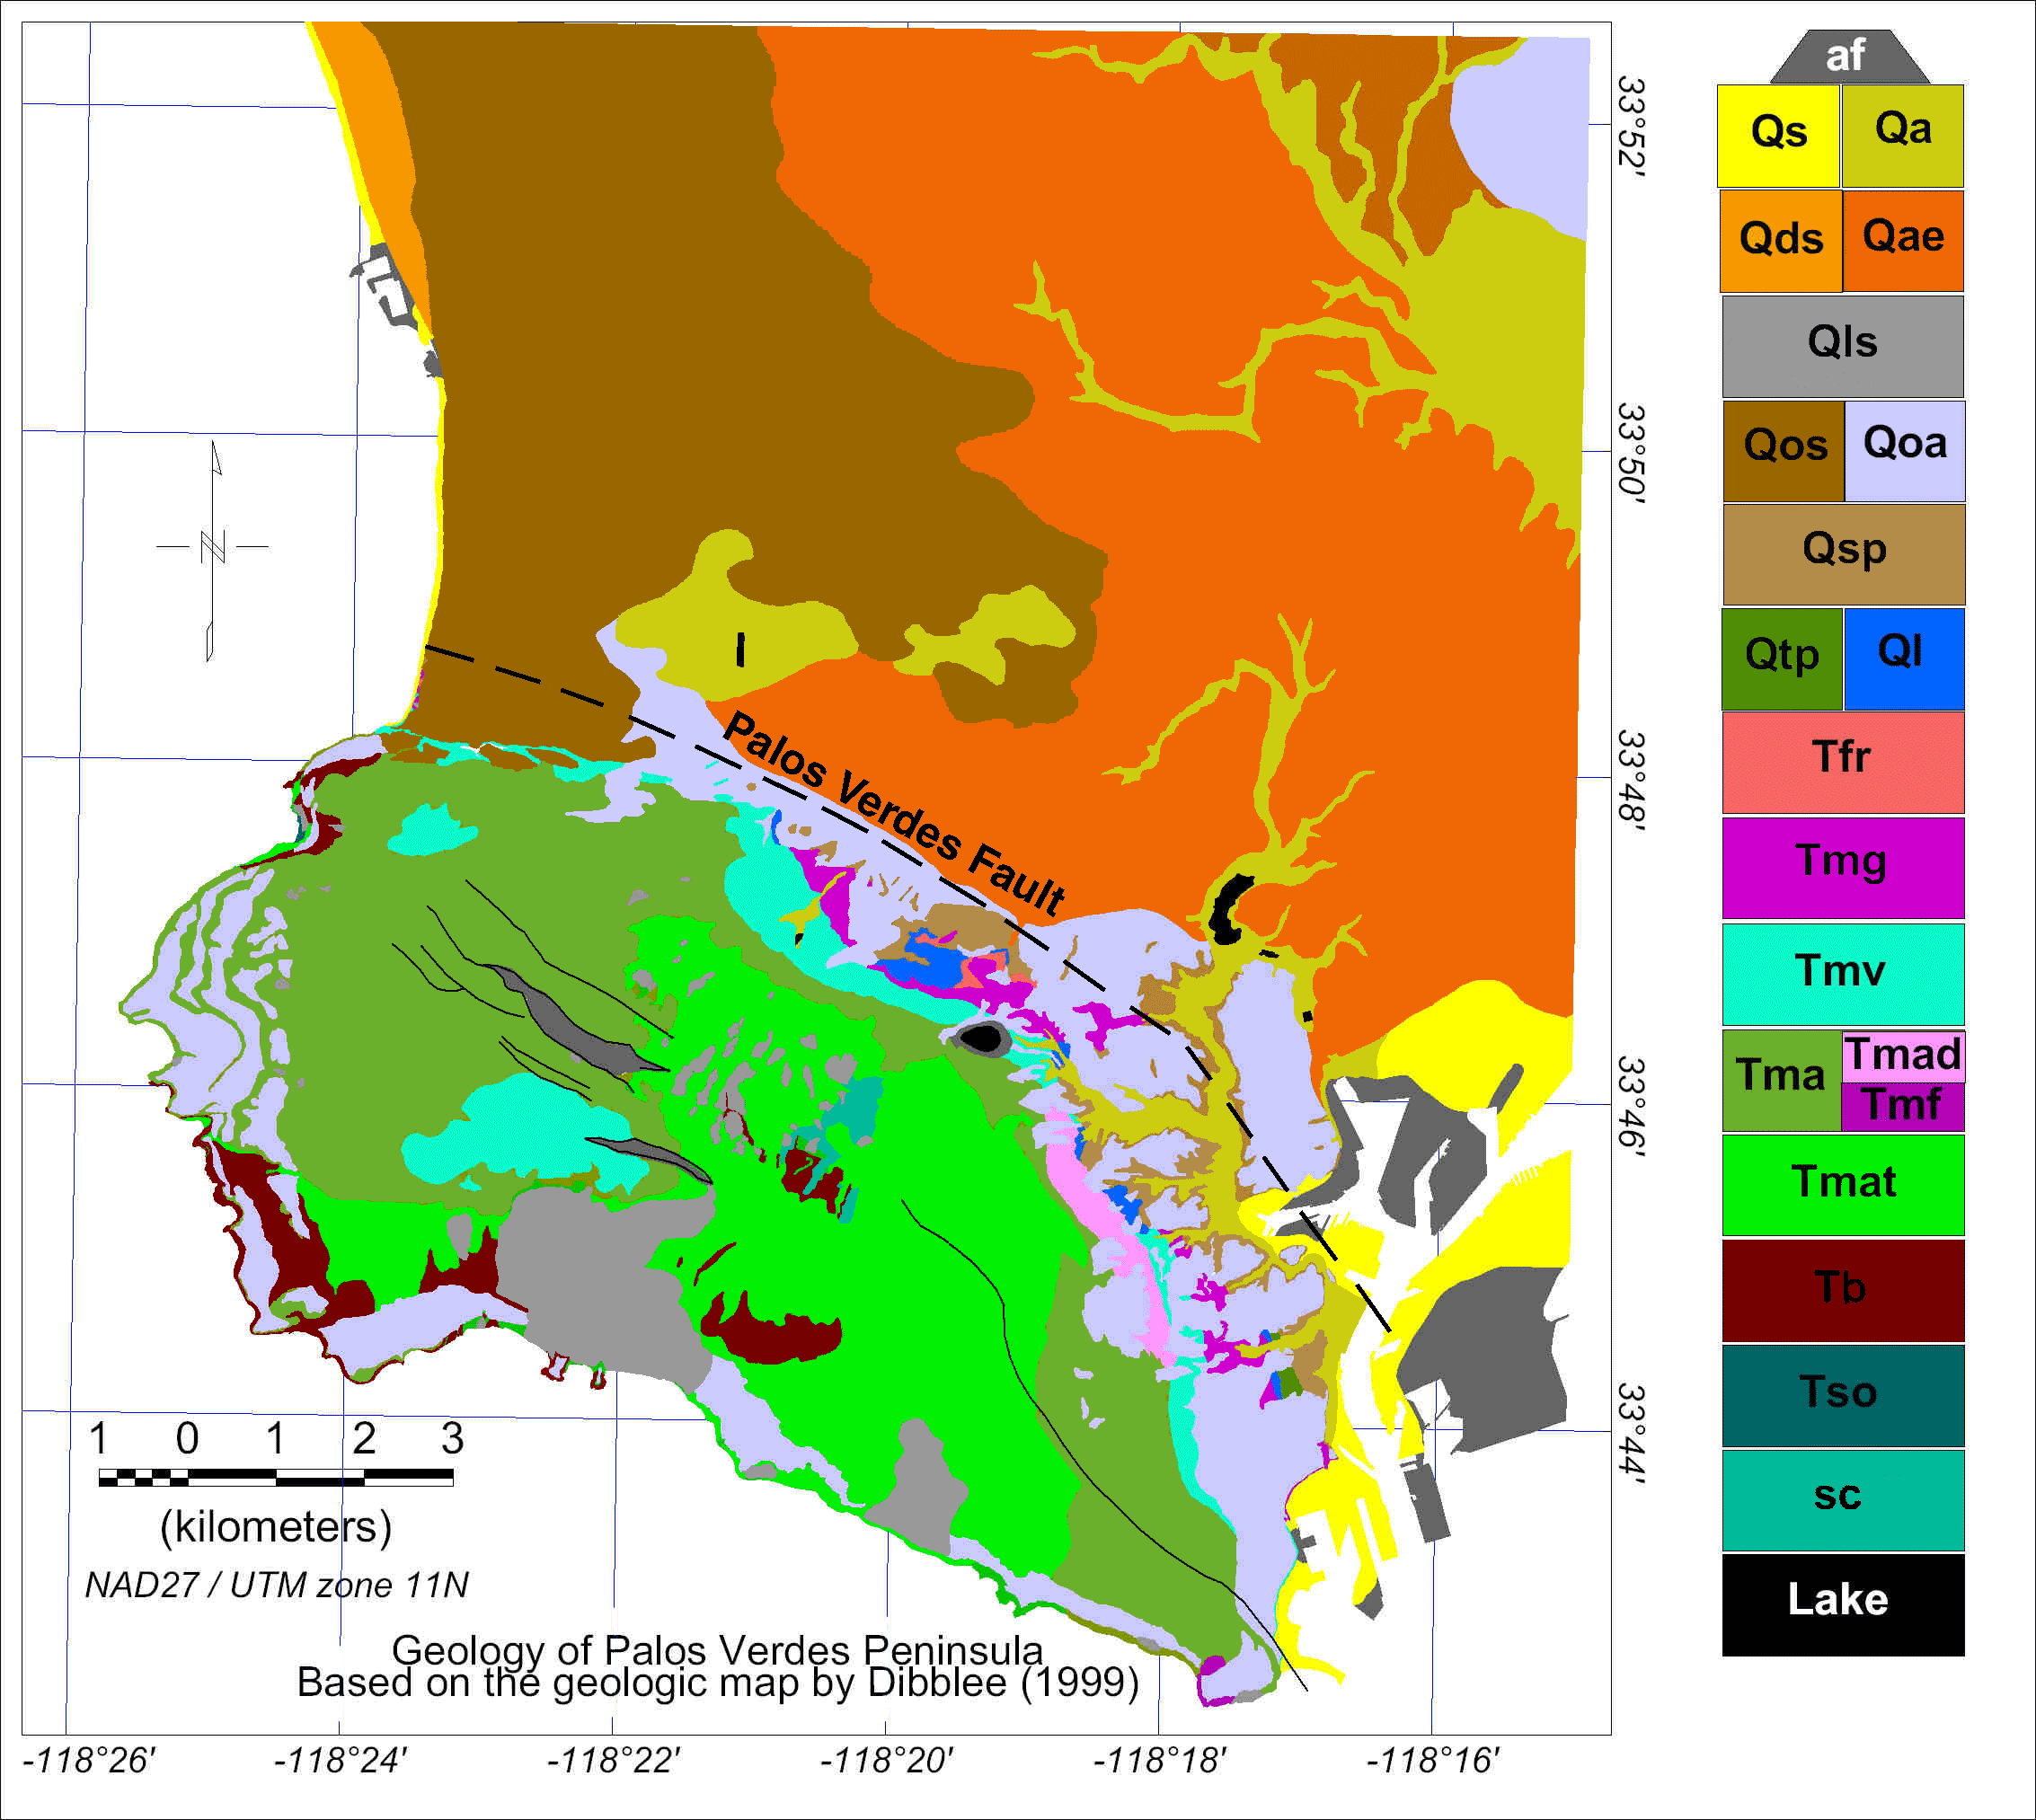 Image of geology of Palos Verdes Peninsula.